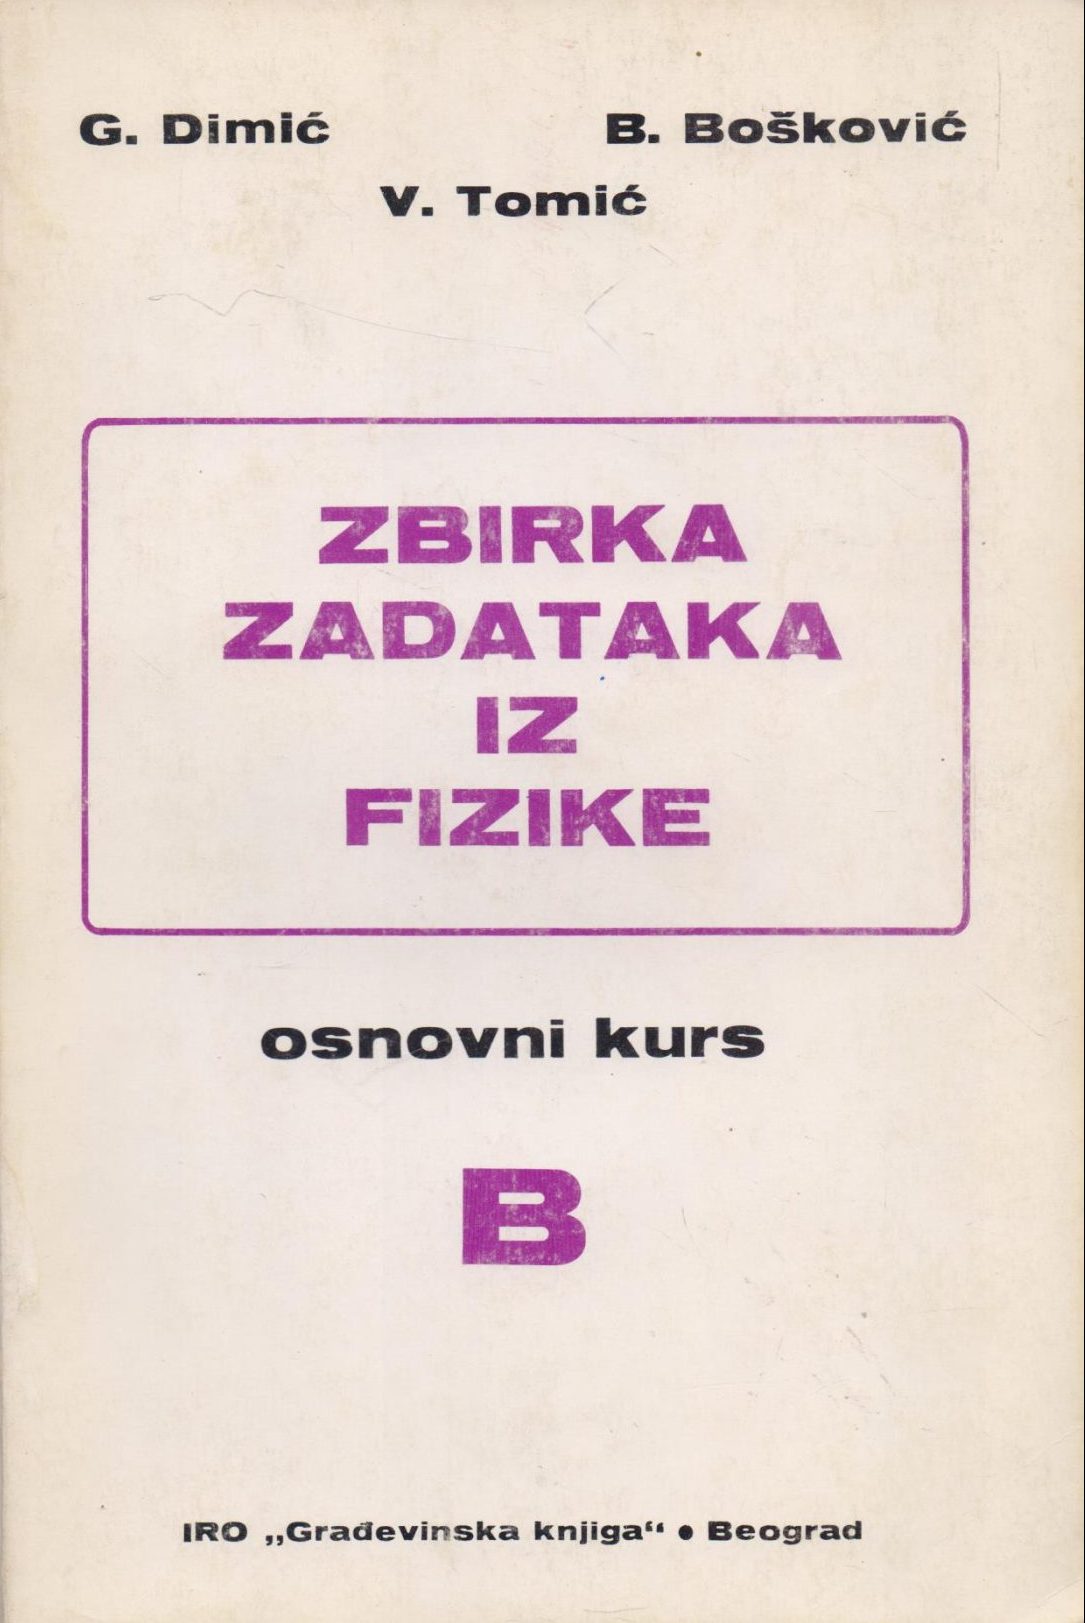 Zbirka zadataka iz fizike osnovni kurs B G. Dimić, B. Bošković, V. Tomić